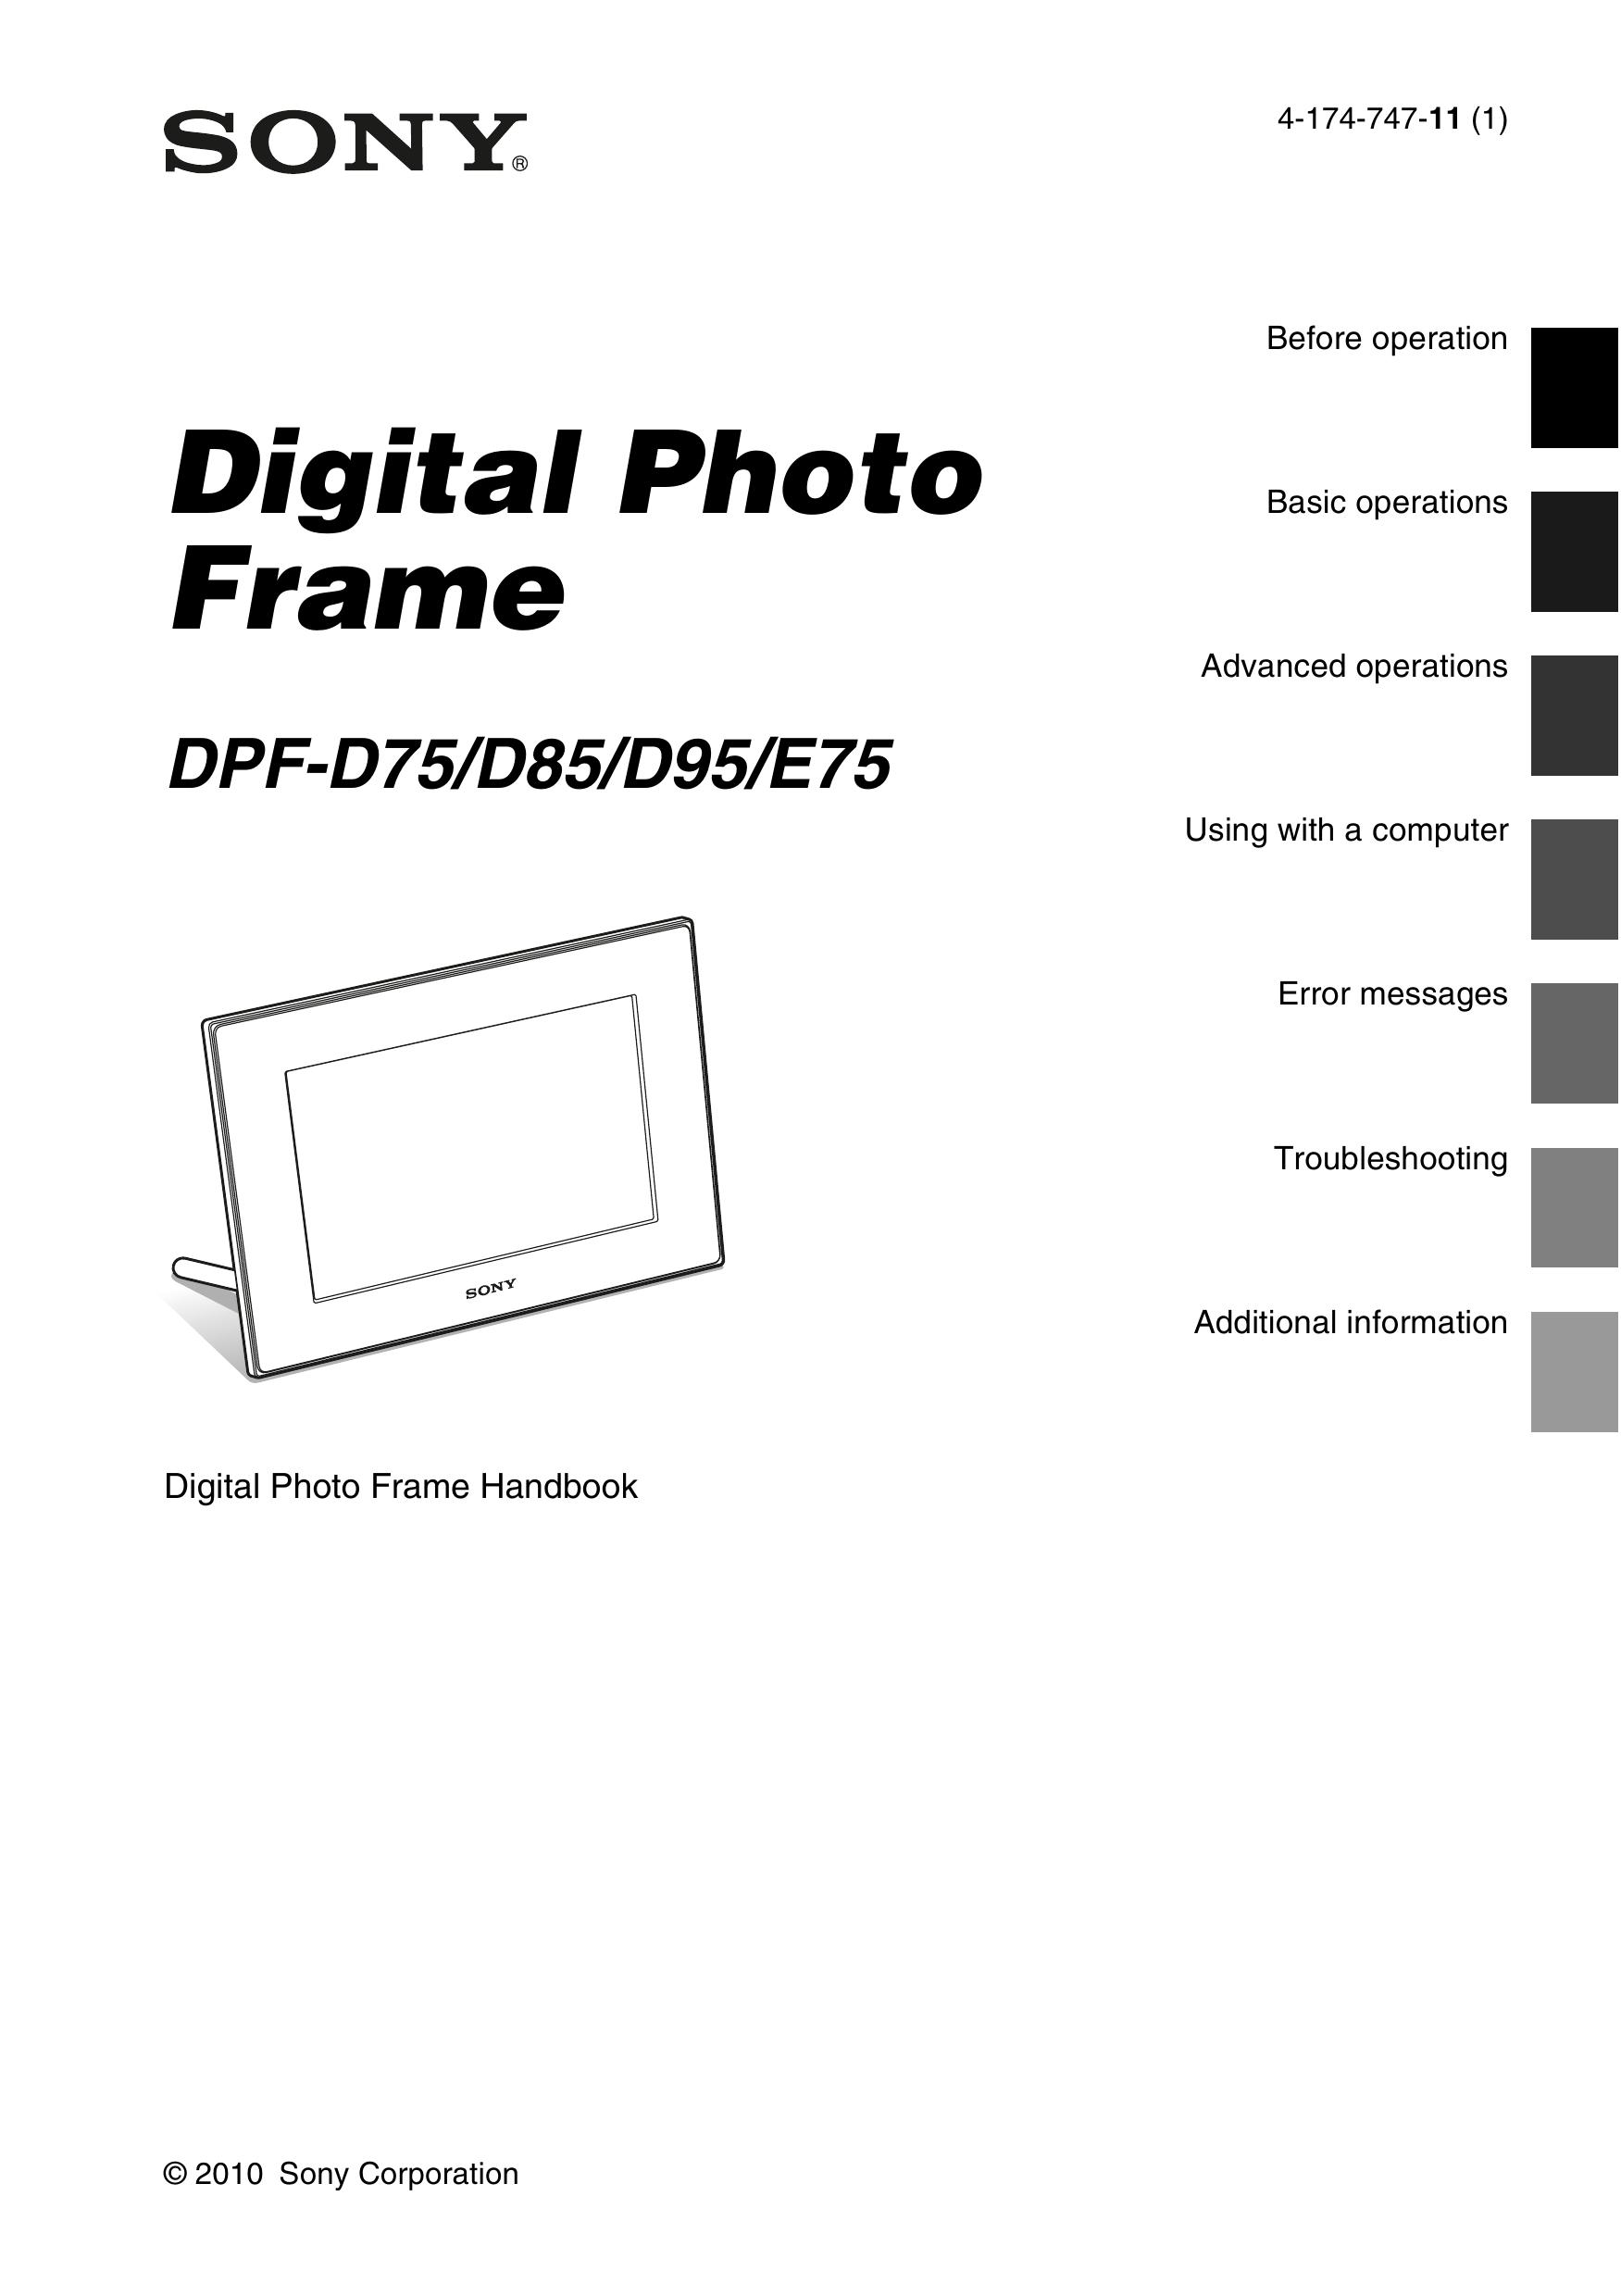 Sony DPF-E75 Digital Photo Frame User Manual